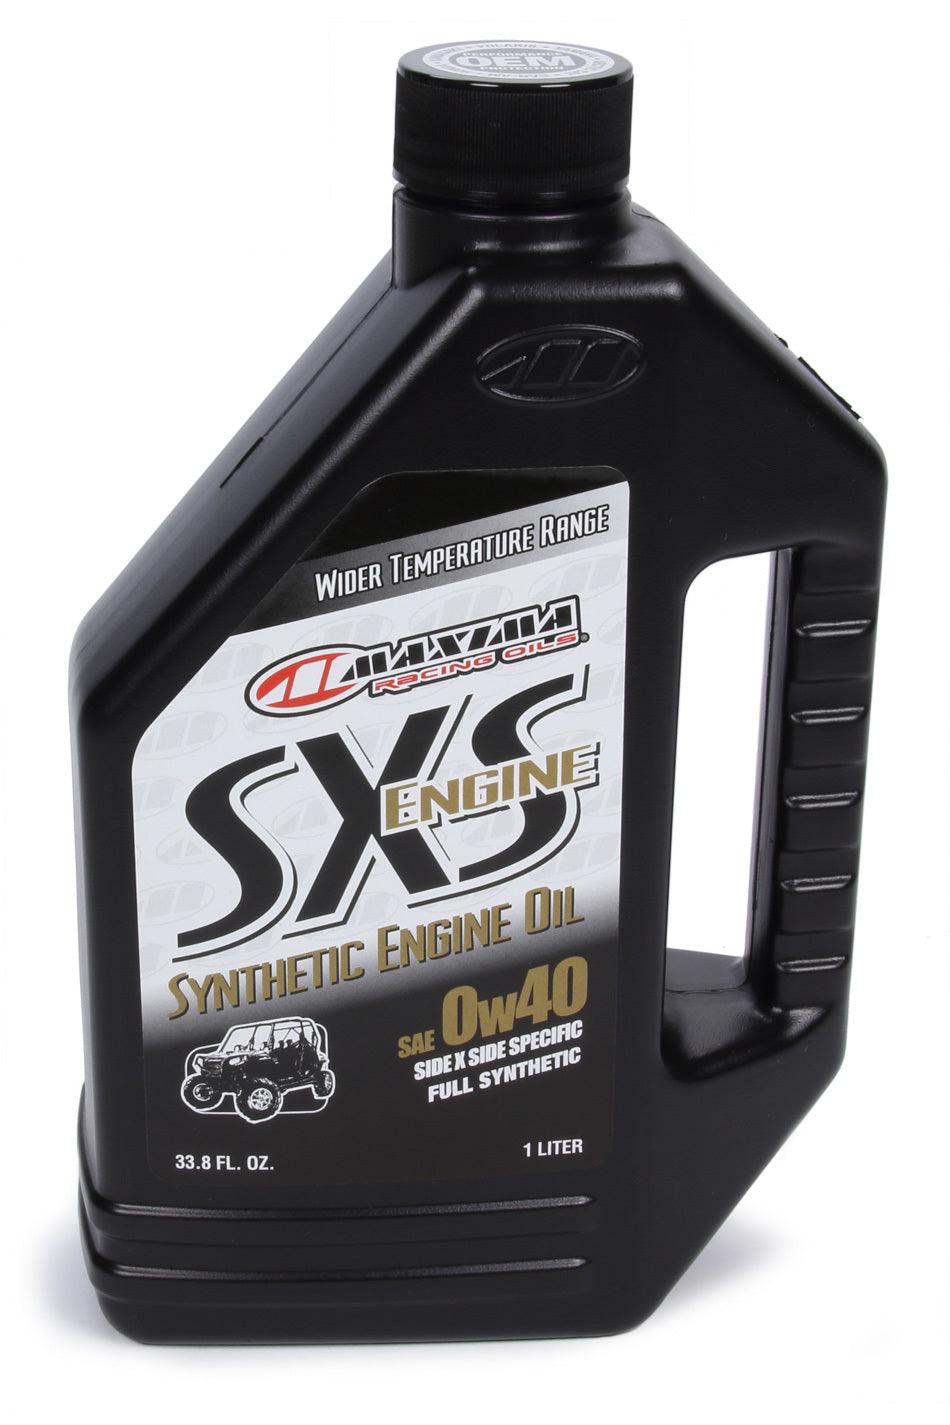 SXS Engine Full Syntheti c 0w40 1 Liter - Burlile Performance Products